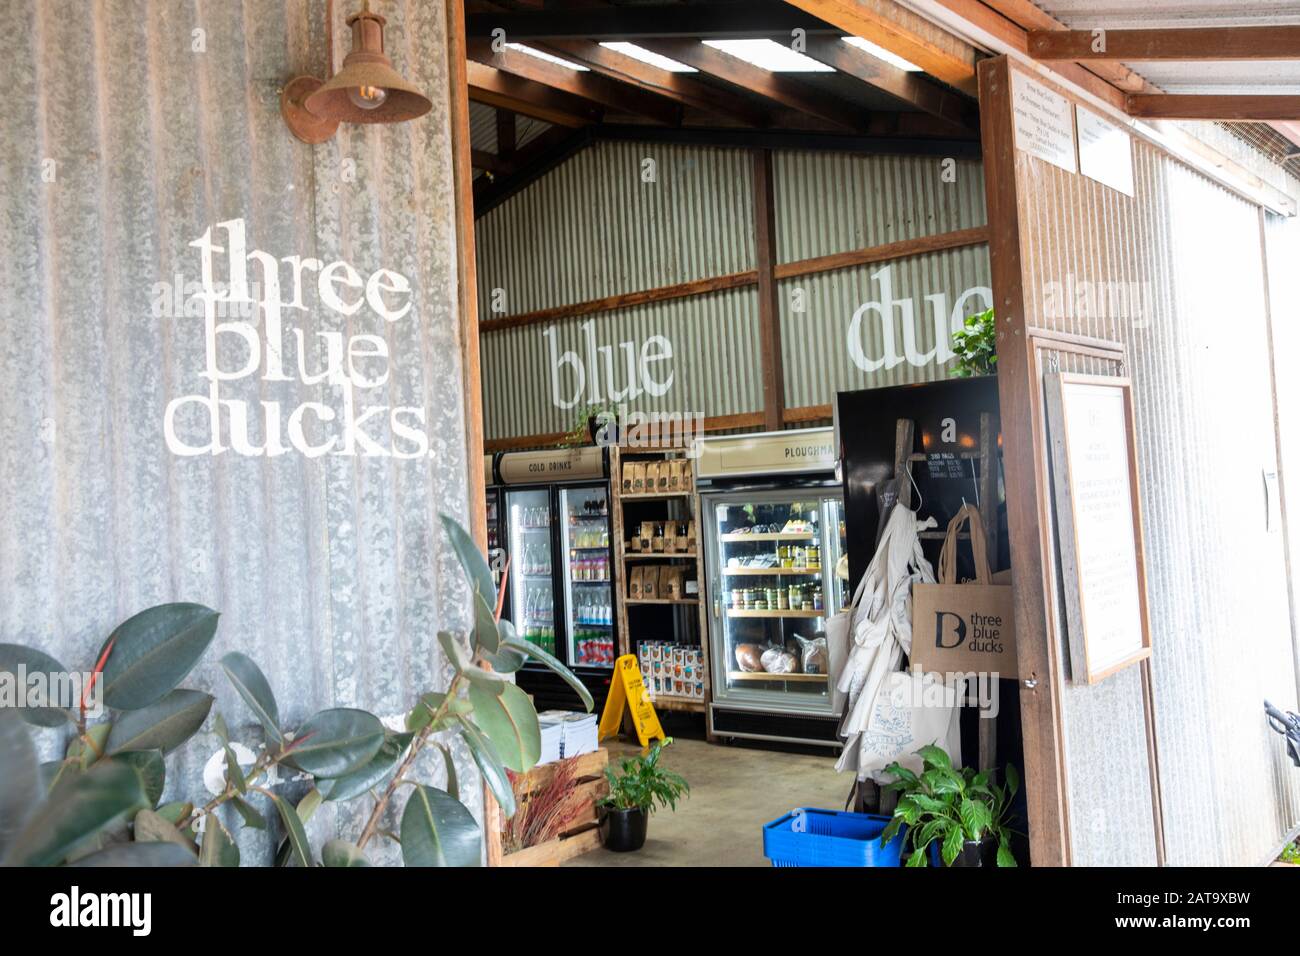 Three blue ducks restaurant at The Farm in Ewingsdale Byron Bay,Australia Stock Photo